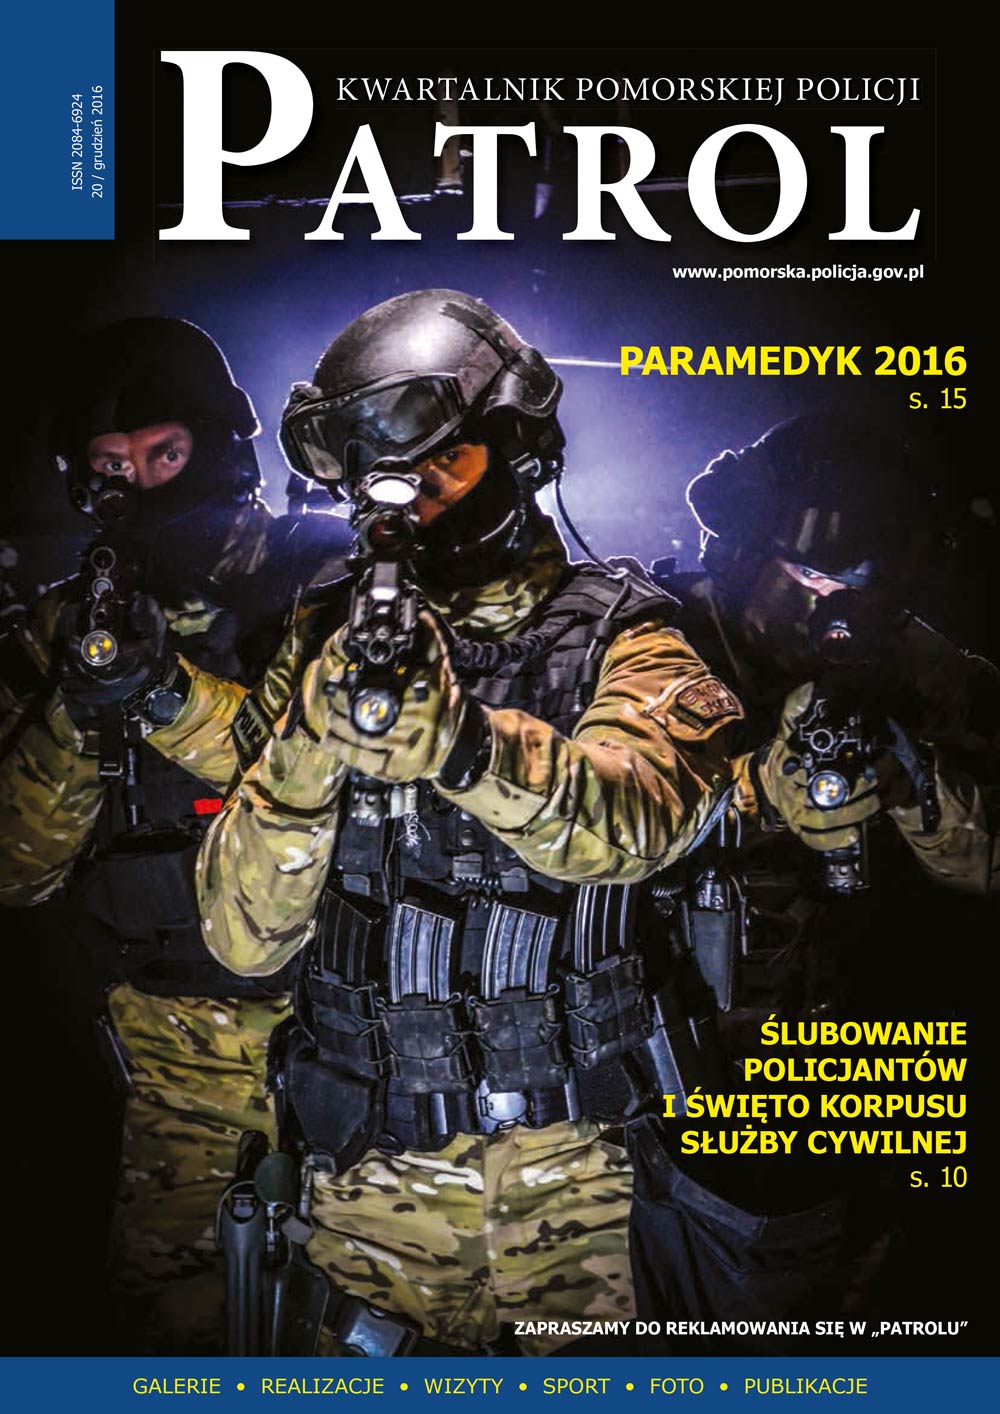 [2016, 04] PATROL. KWARTALNIK POMORSKIEJ POLICJI. - 2016, [nr] 20 / grudzień, www.pomorska.policja.gov.pl